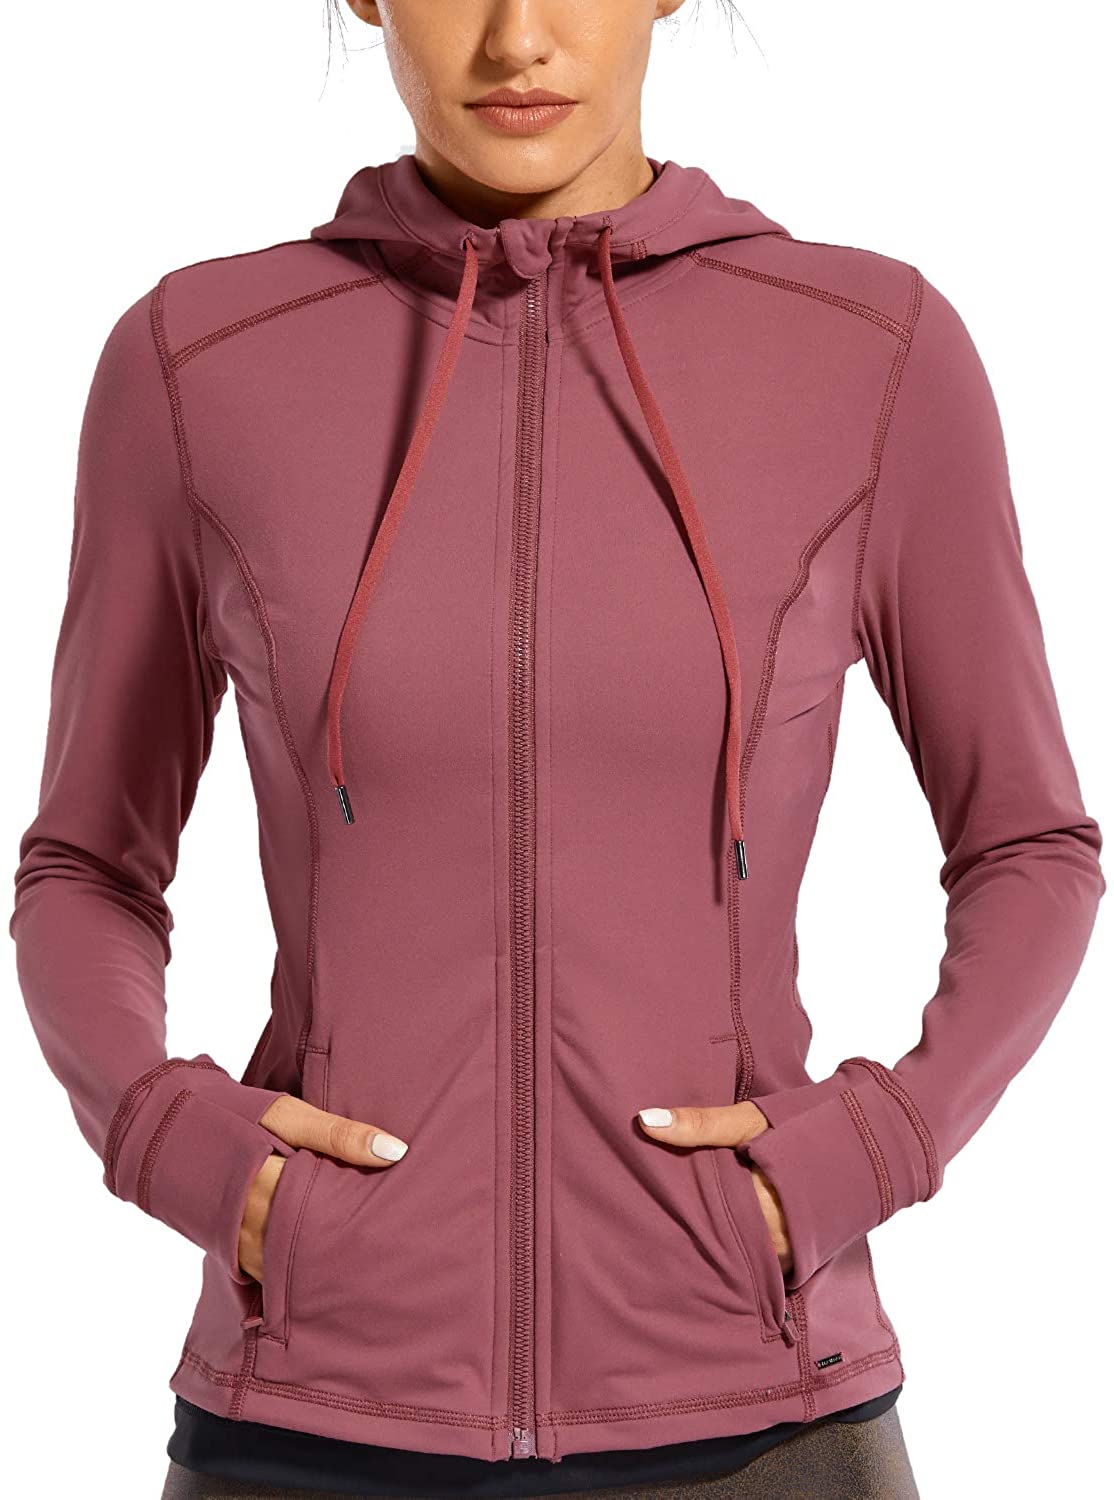 CRZ YOGA Women's Brushed Full Zip Hoodie Jacket Sportswear Hooded Workout  Track